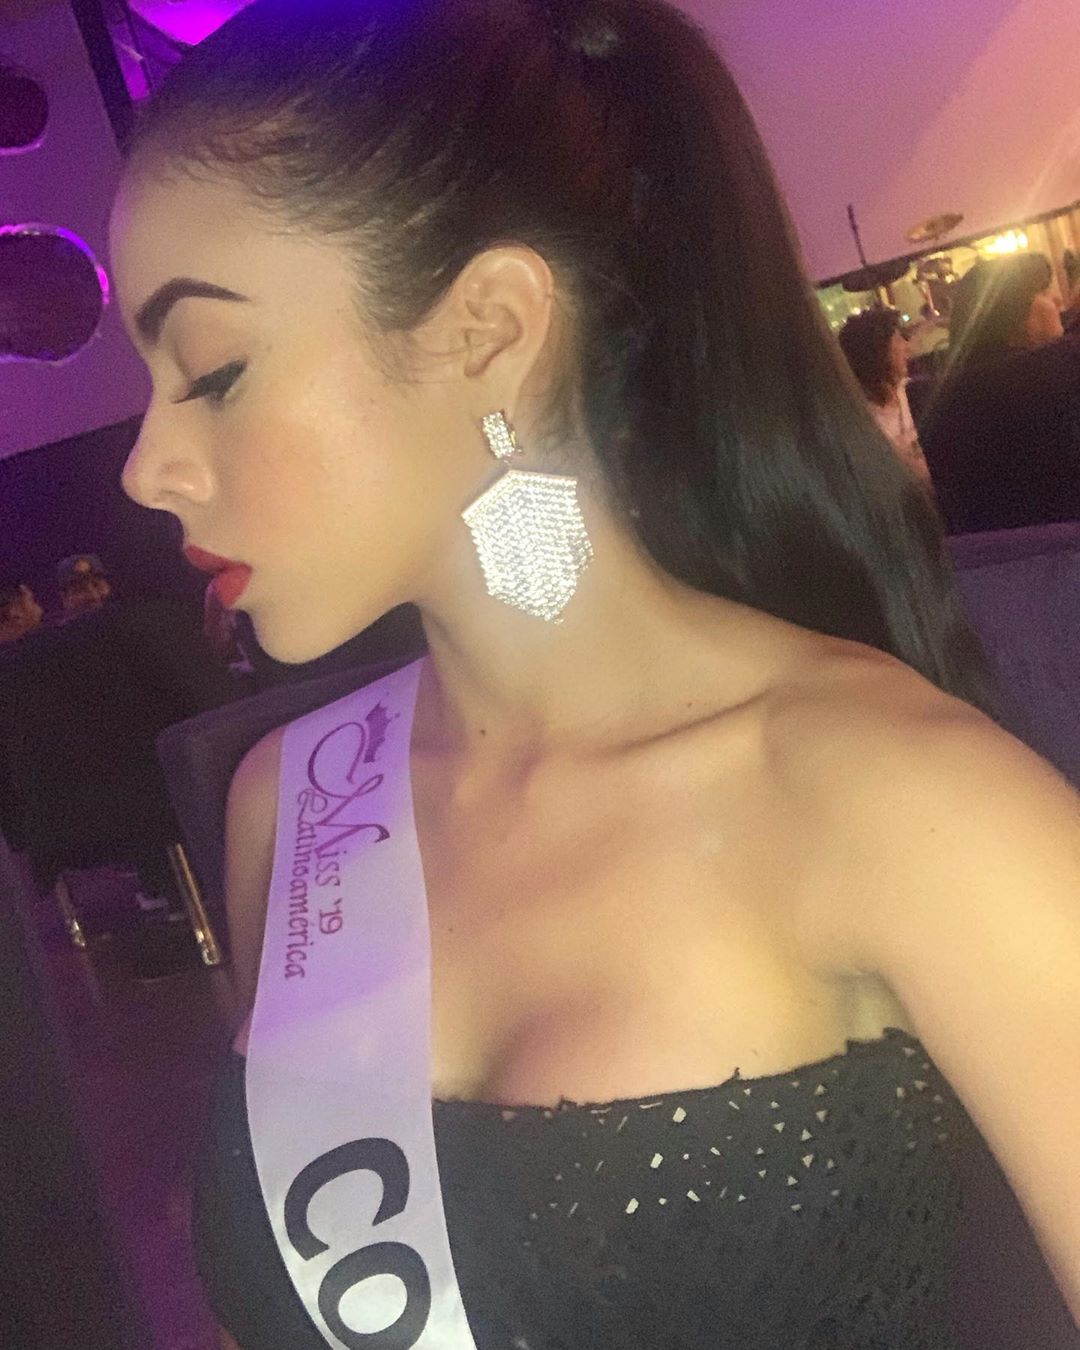 gina aguirre, virreyna de miss latinoamerica 2019. - Página 4 68949810